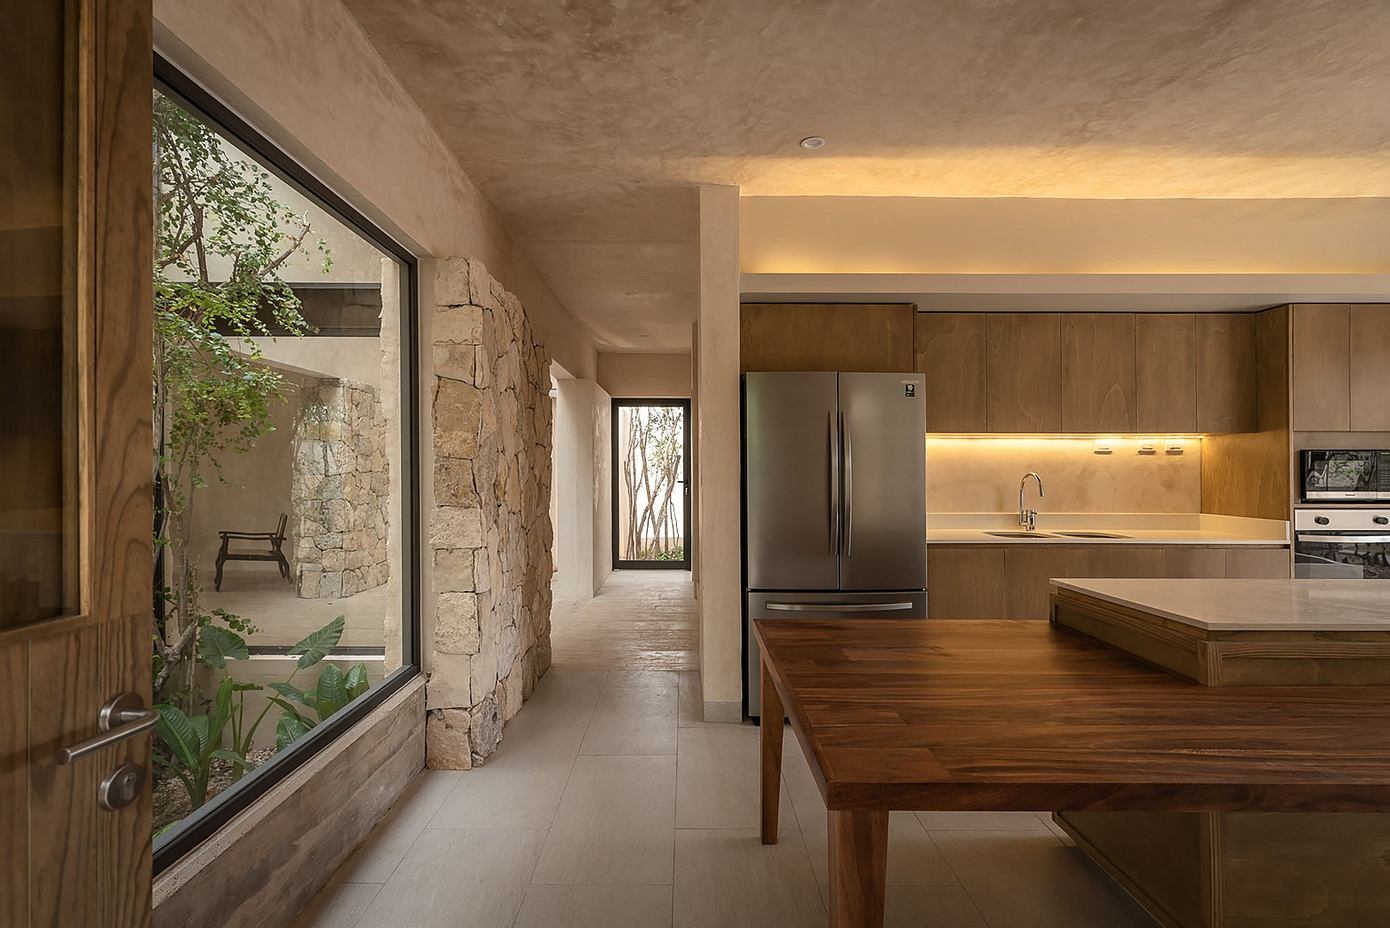 Villa Arrebol: A Peek Inside a Modern Hacienda-Style Home